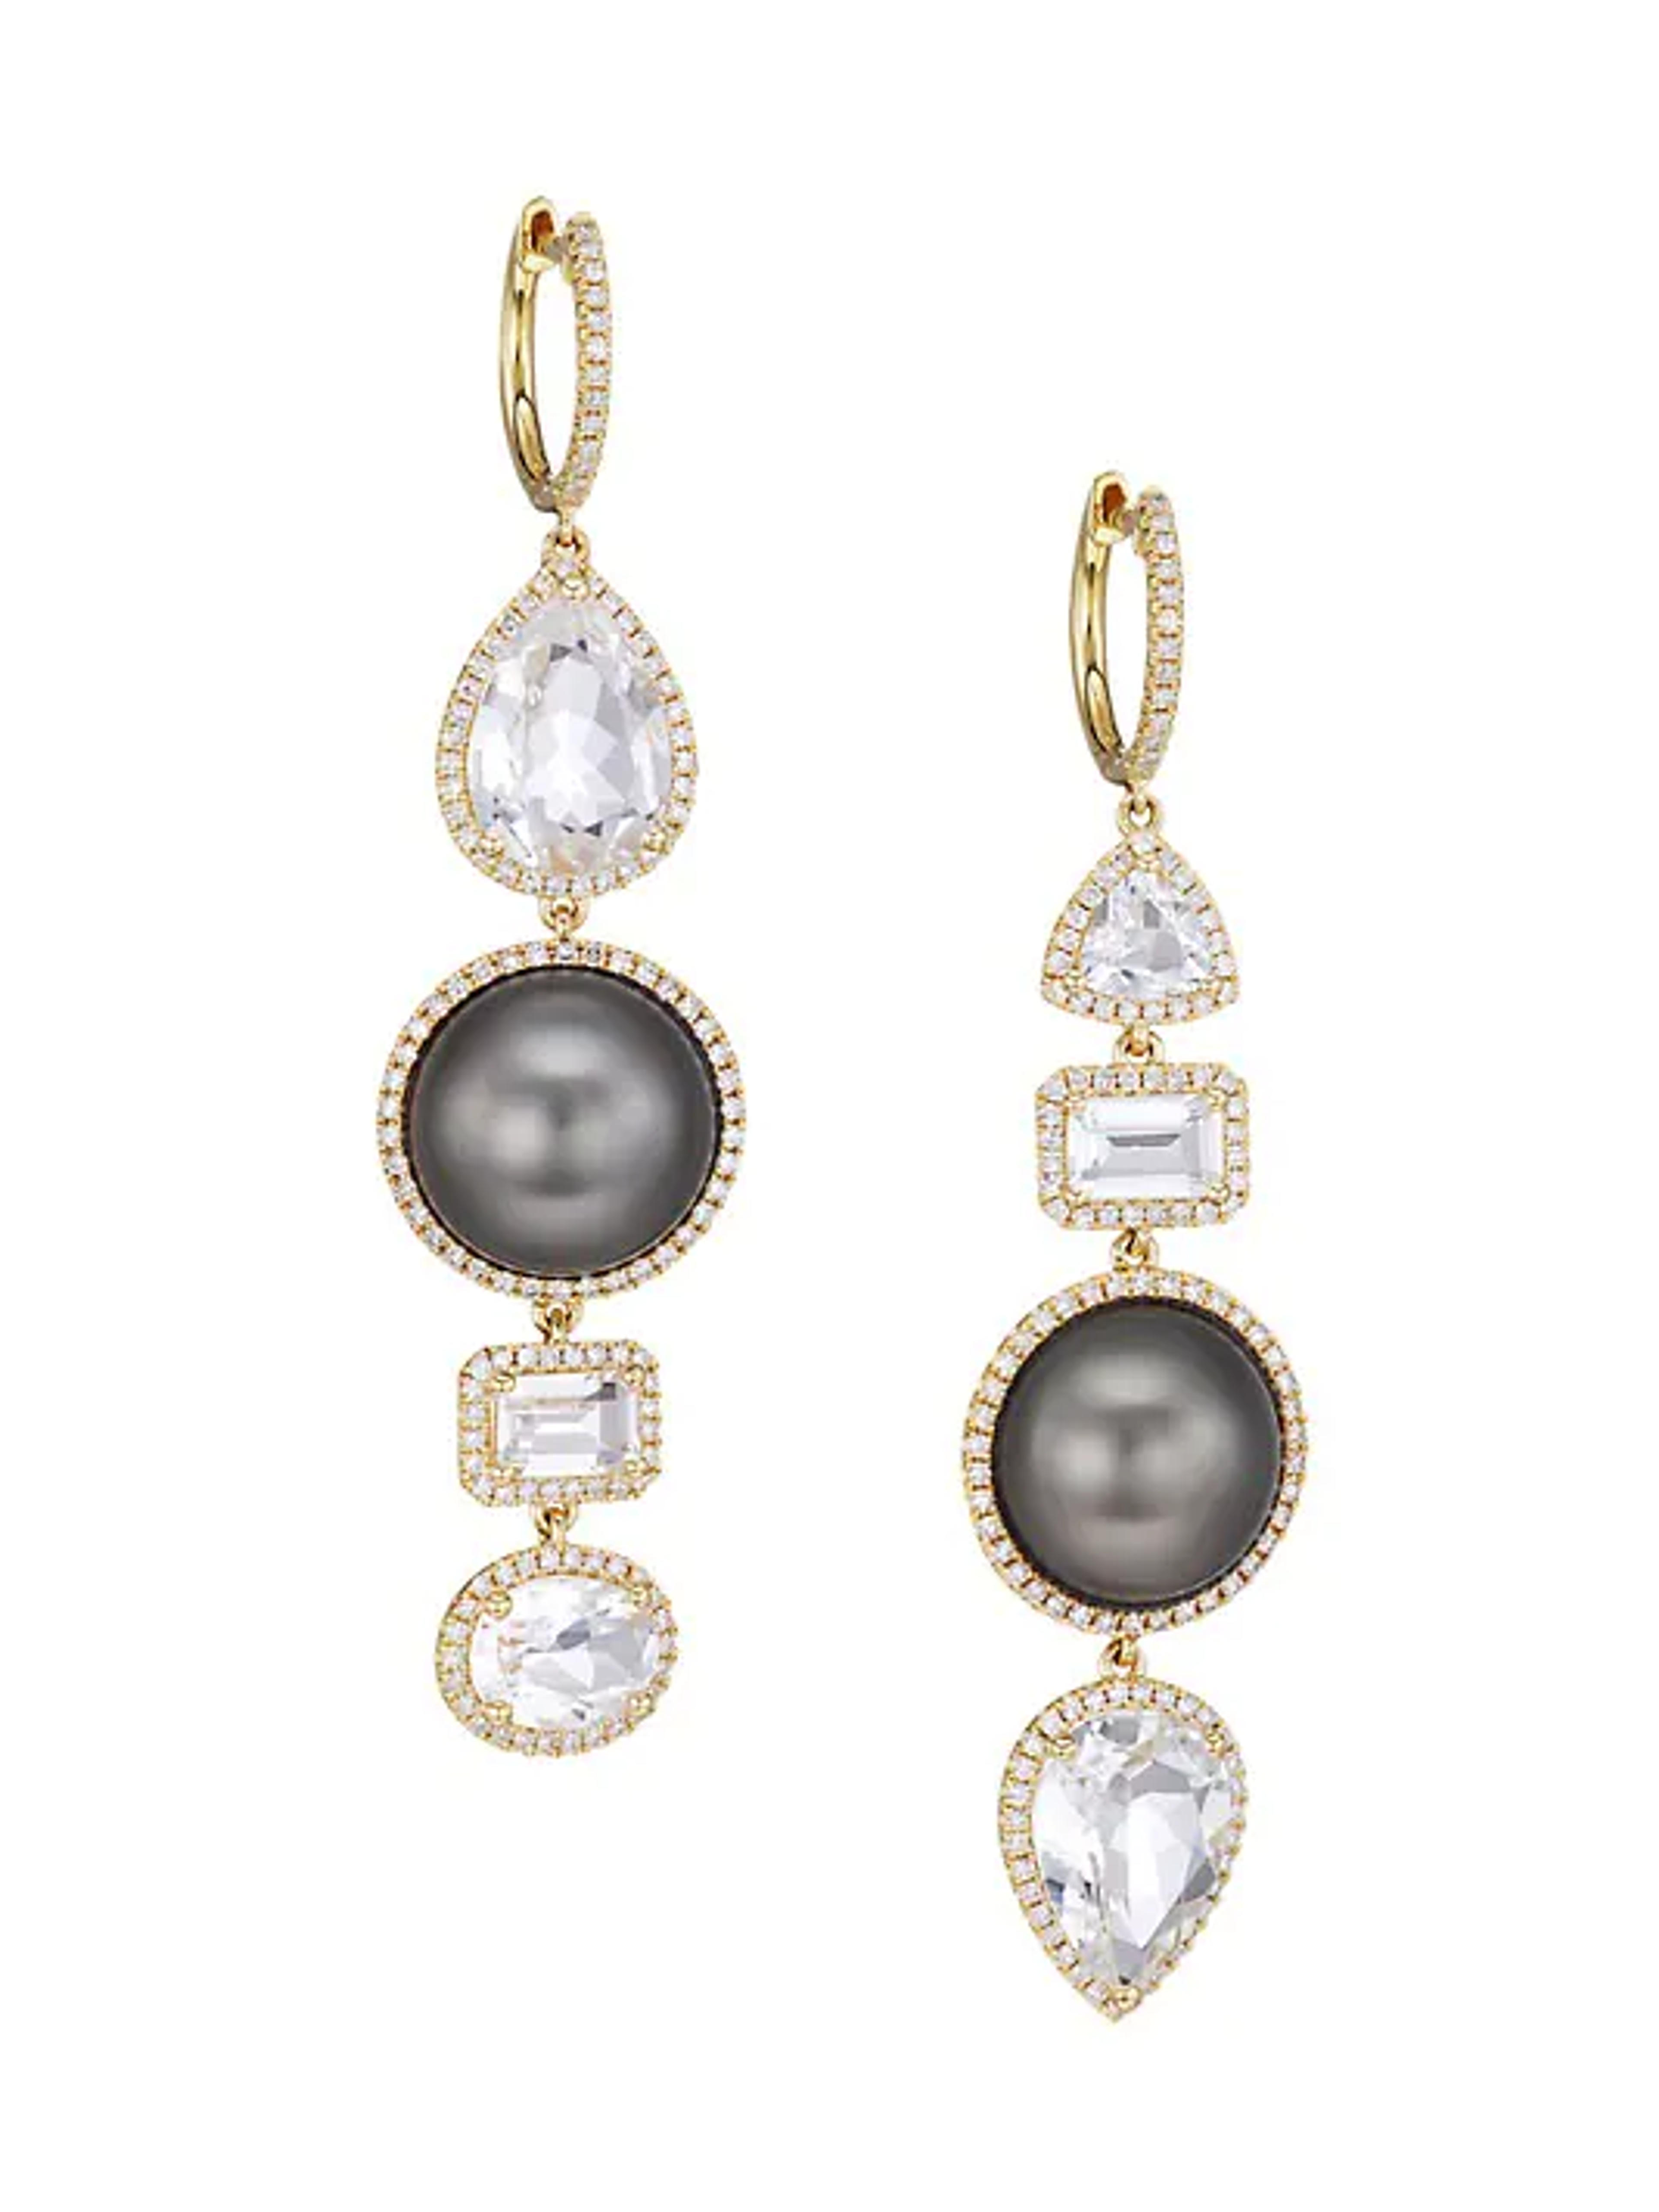 Shop Samira 13 18K Yellow Gold, 12MM Tahitian Pearl, Diamond & White Topaz Mismatched Drop Earrings | Saks Fifth Avenue